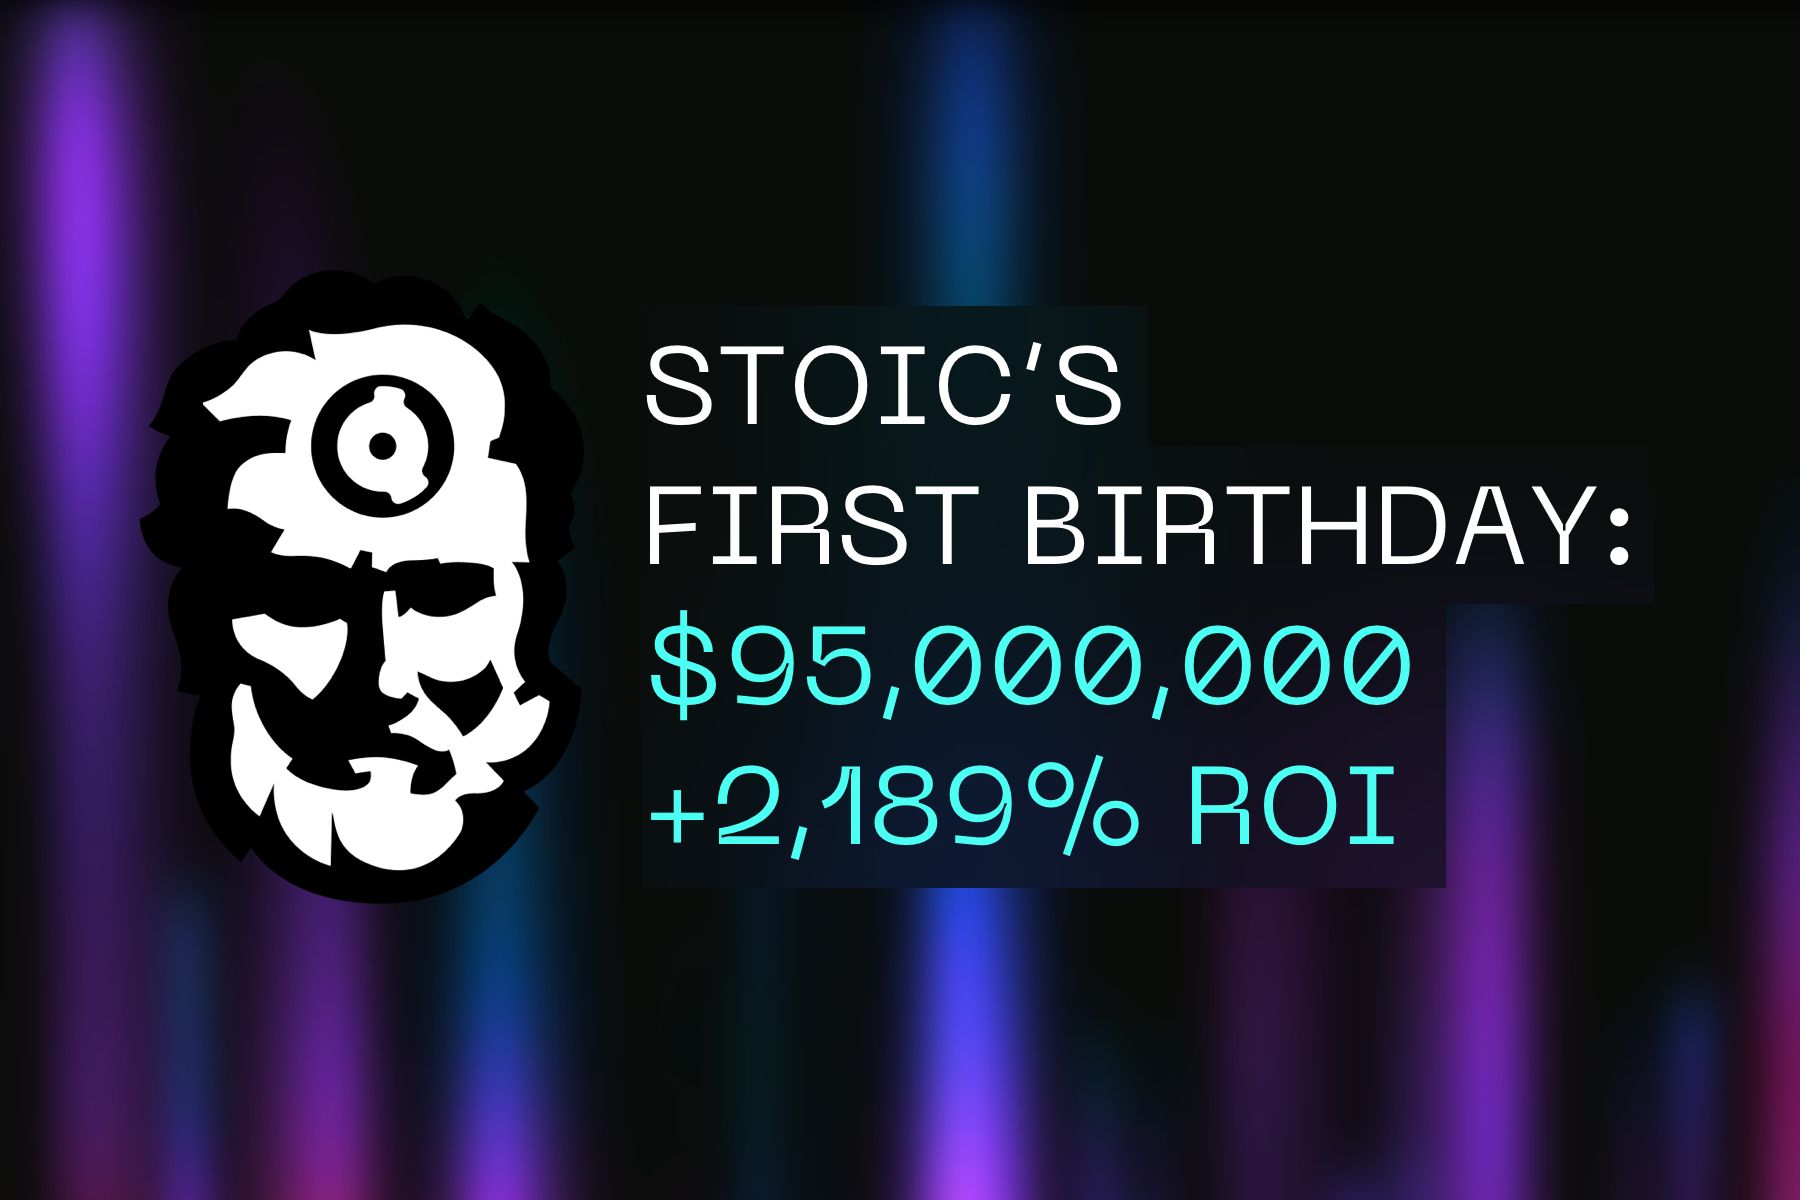 Stoic’s First Birthday: $95 Million and +2,189% ROI